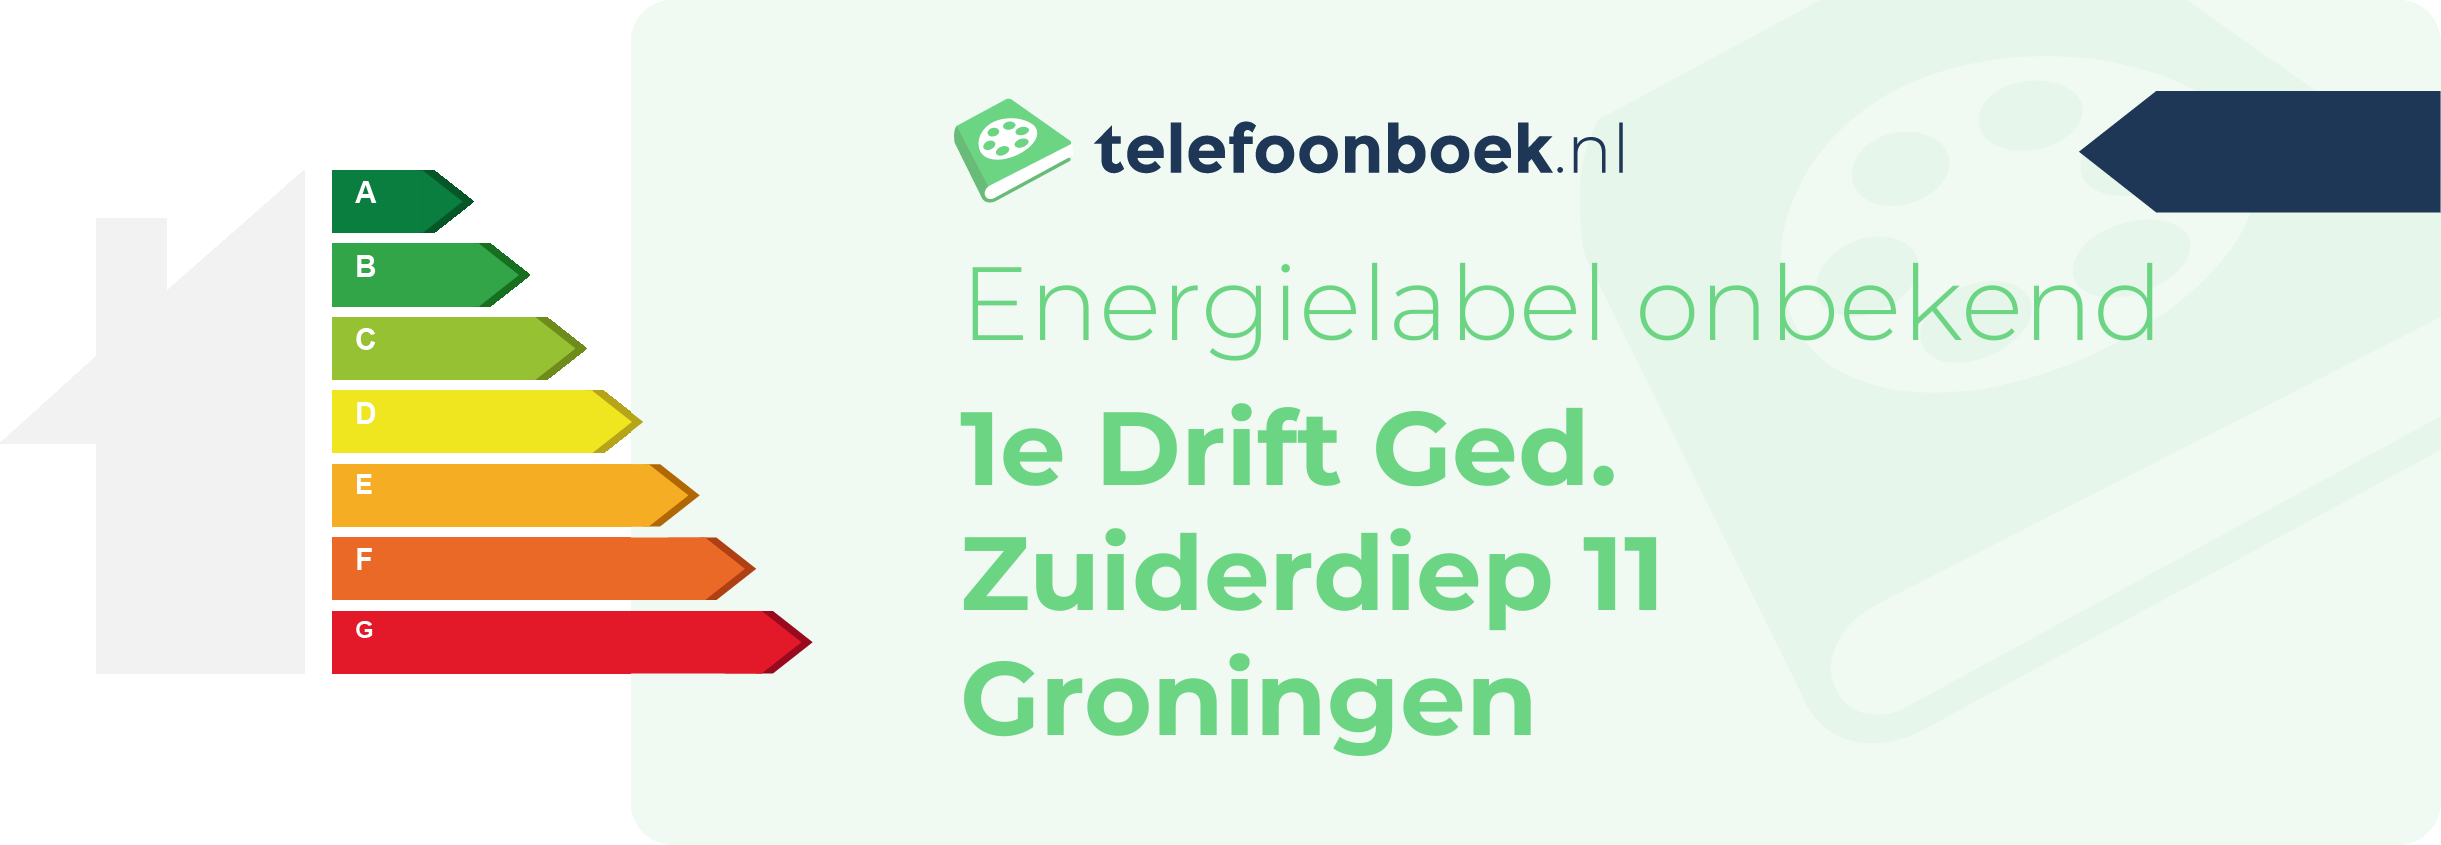 Energielabel 1e Drift Ged. Zuiderdiep 11 Groningen